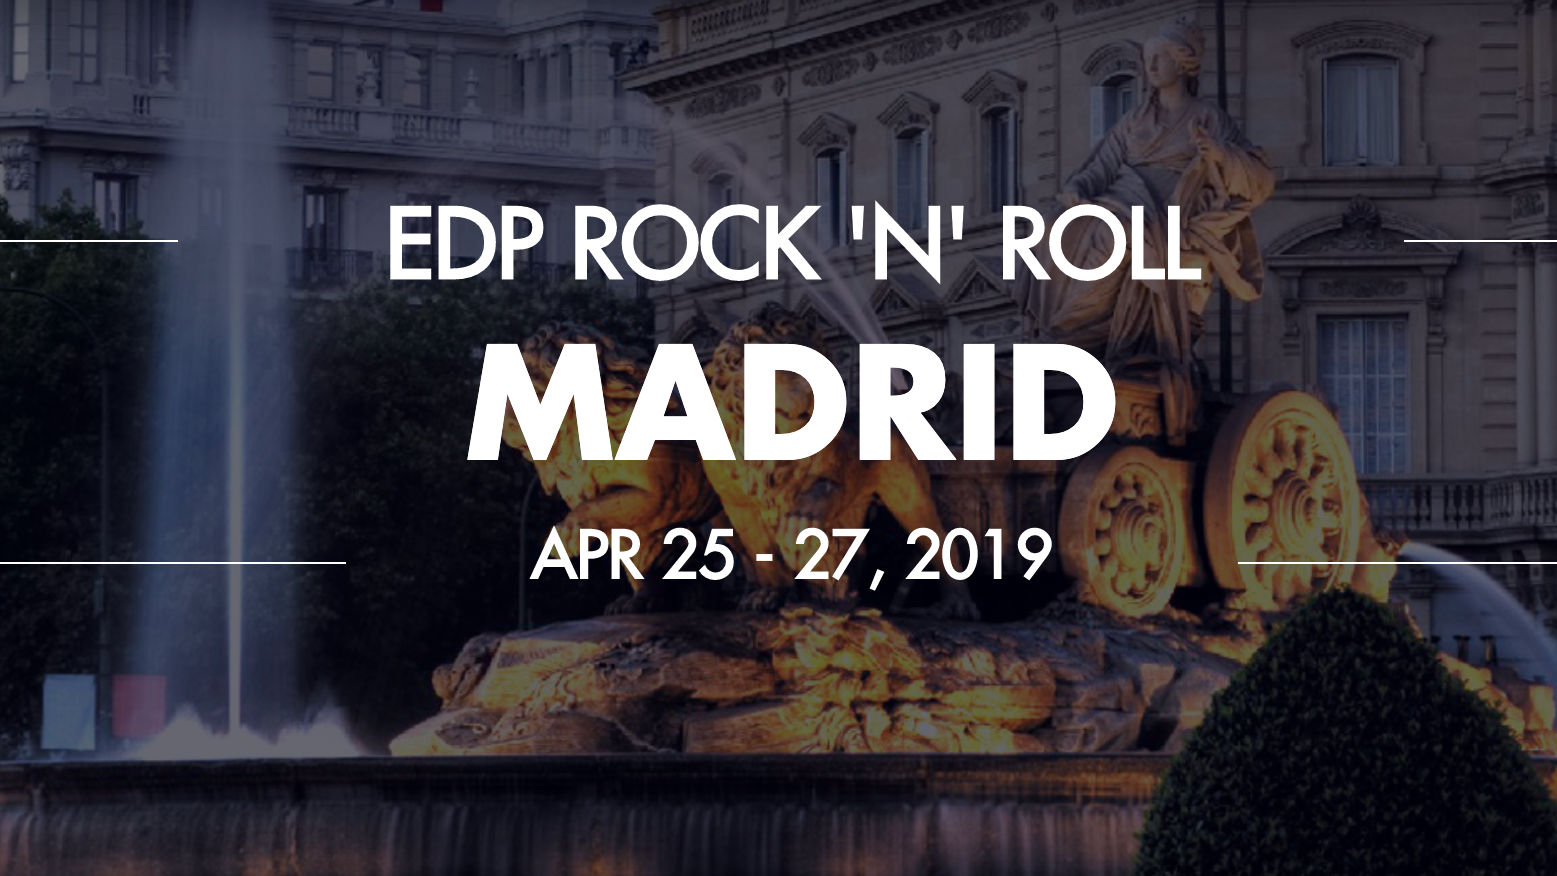 Madrid Rock 'n' roll Marathon